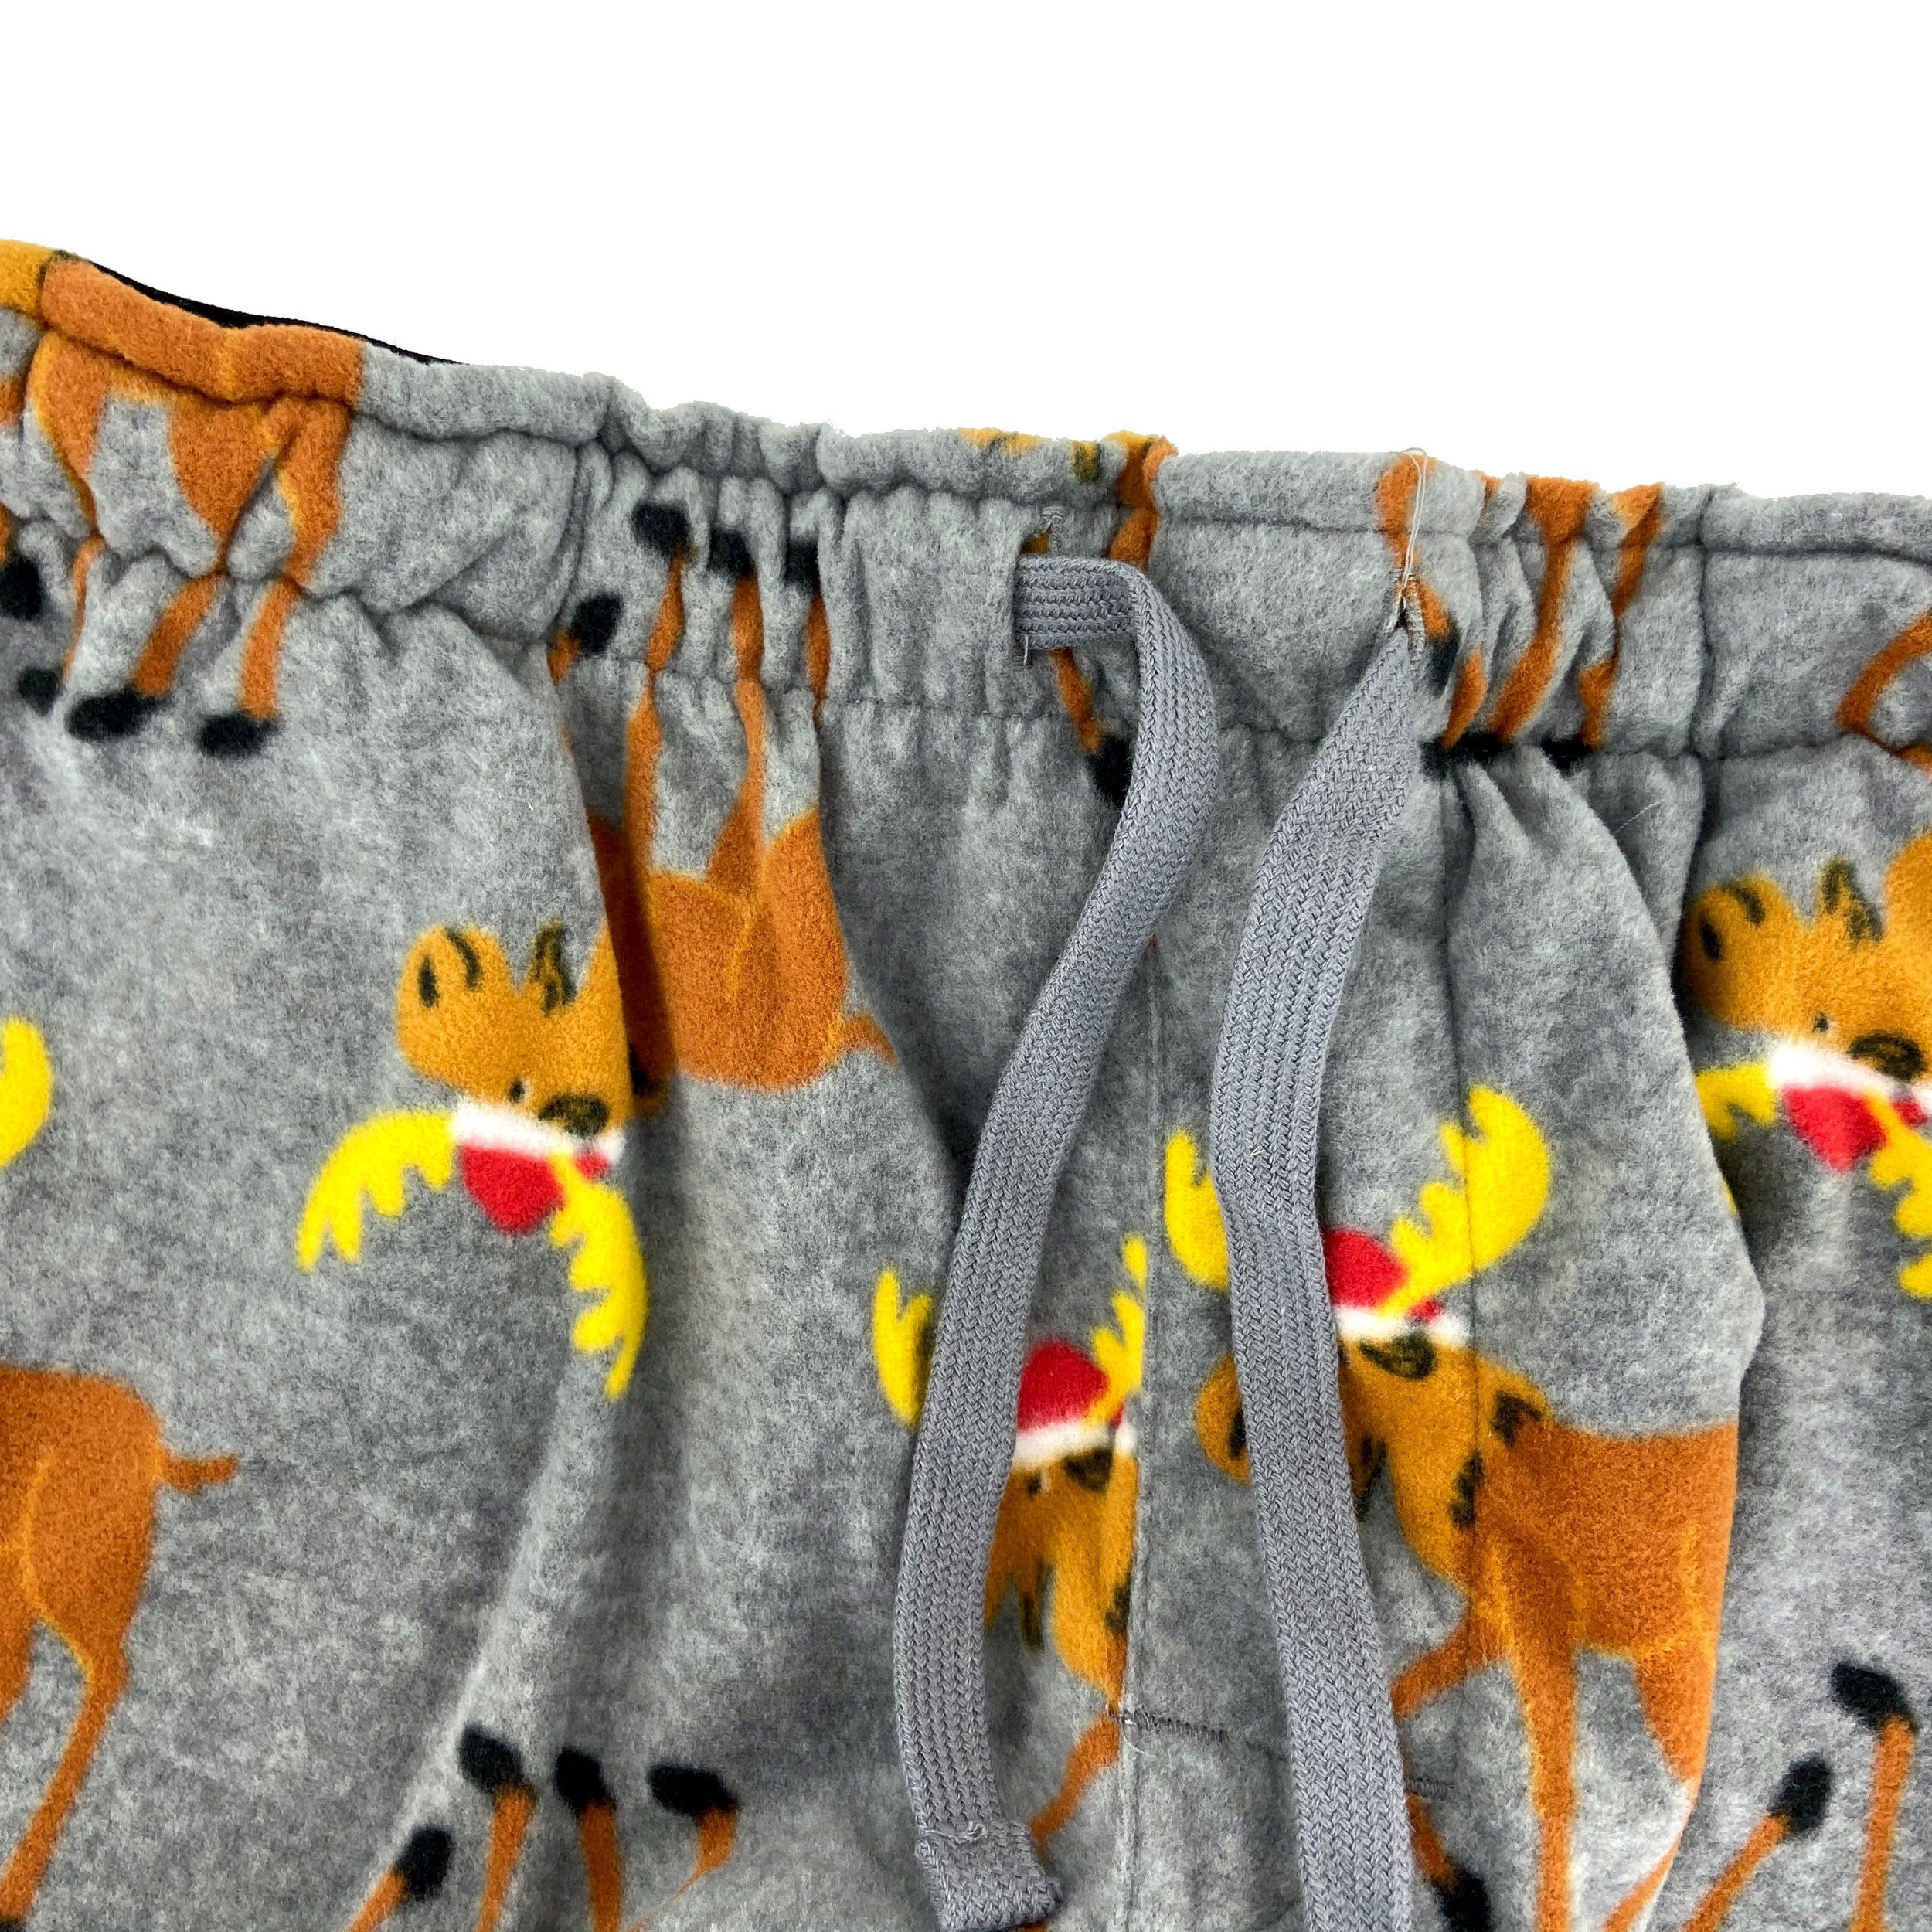 Moose Pajama Pants For Men. Buy Men's Moose Print Lounge Pants Online